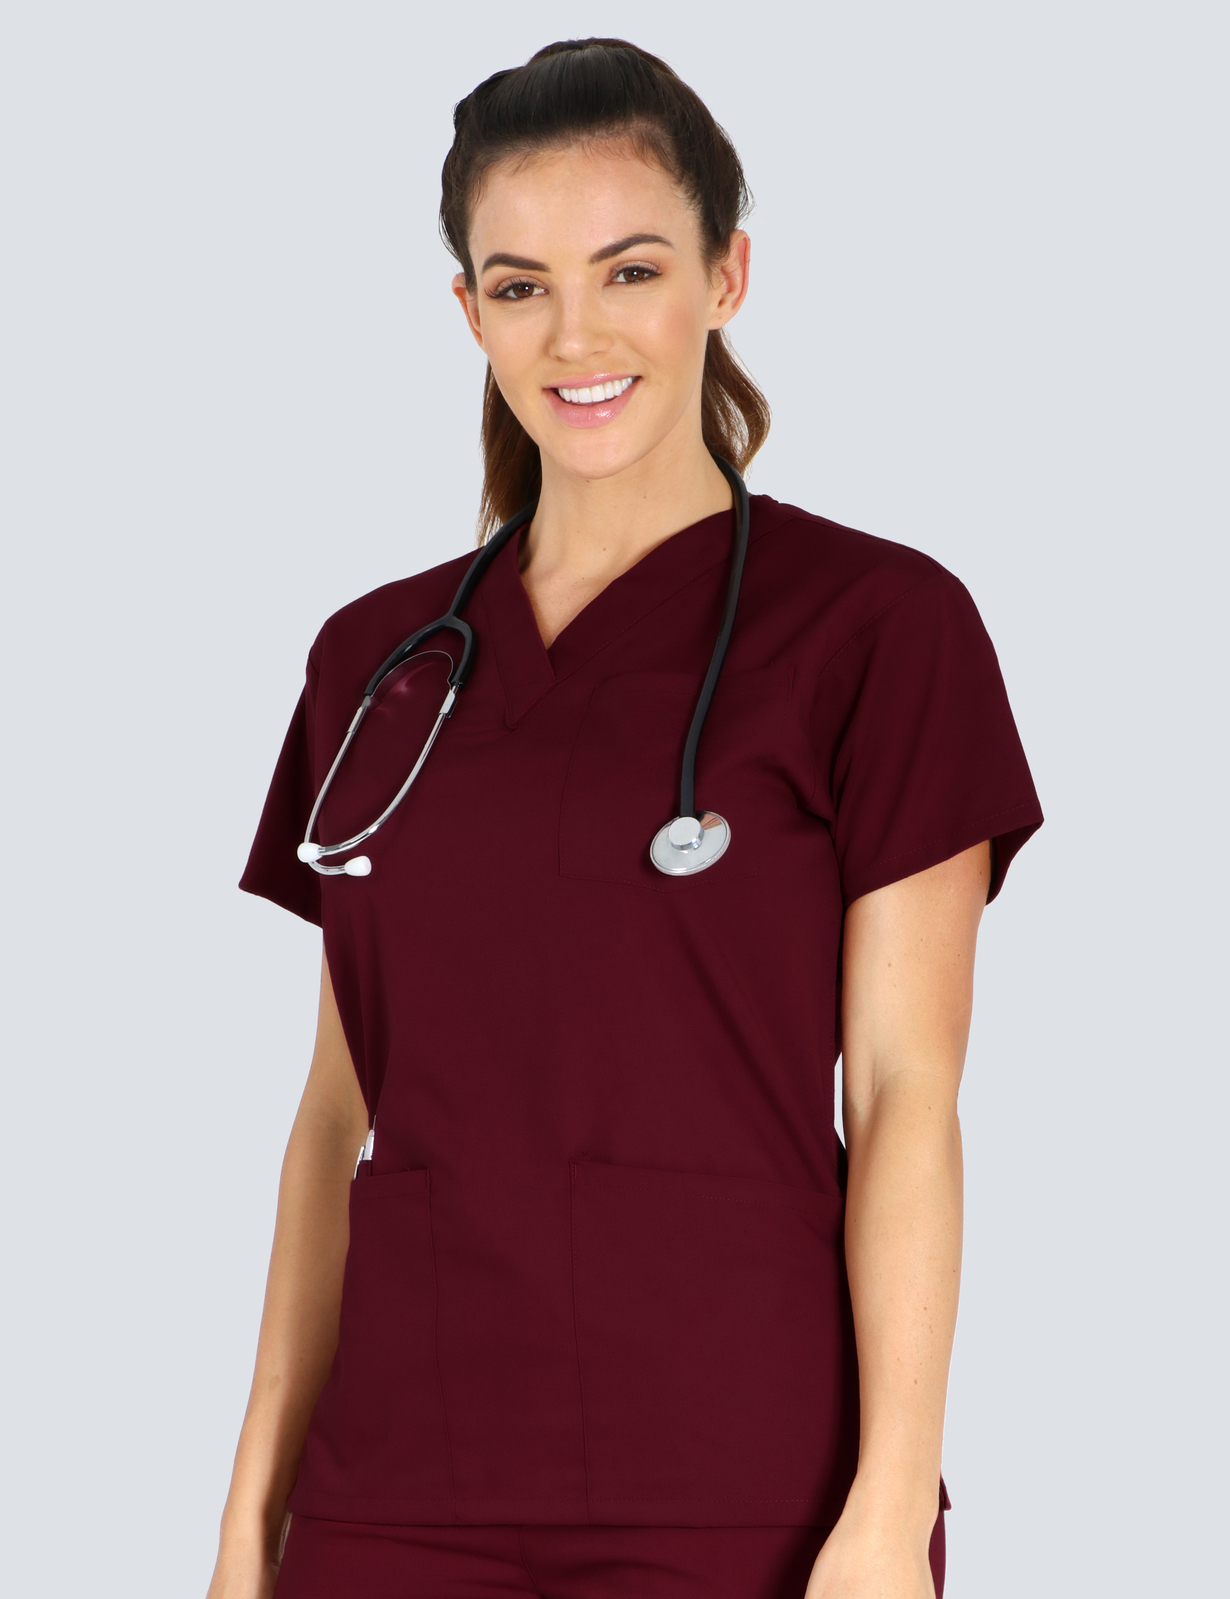 Queensland Children's Hospital Emergency Department Nurse Practitioner Uniform Top Bundle  (4 Pocket Top  in Burgundy  incl Logos)